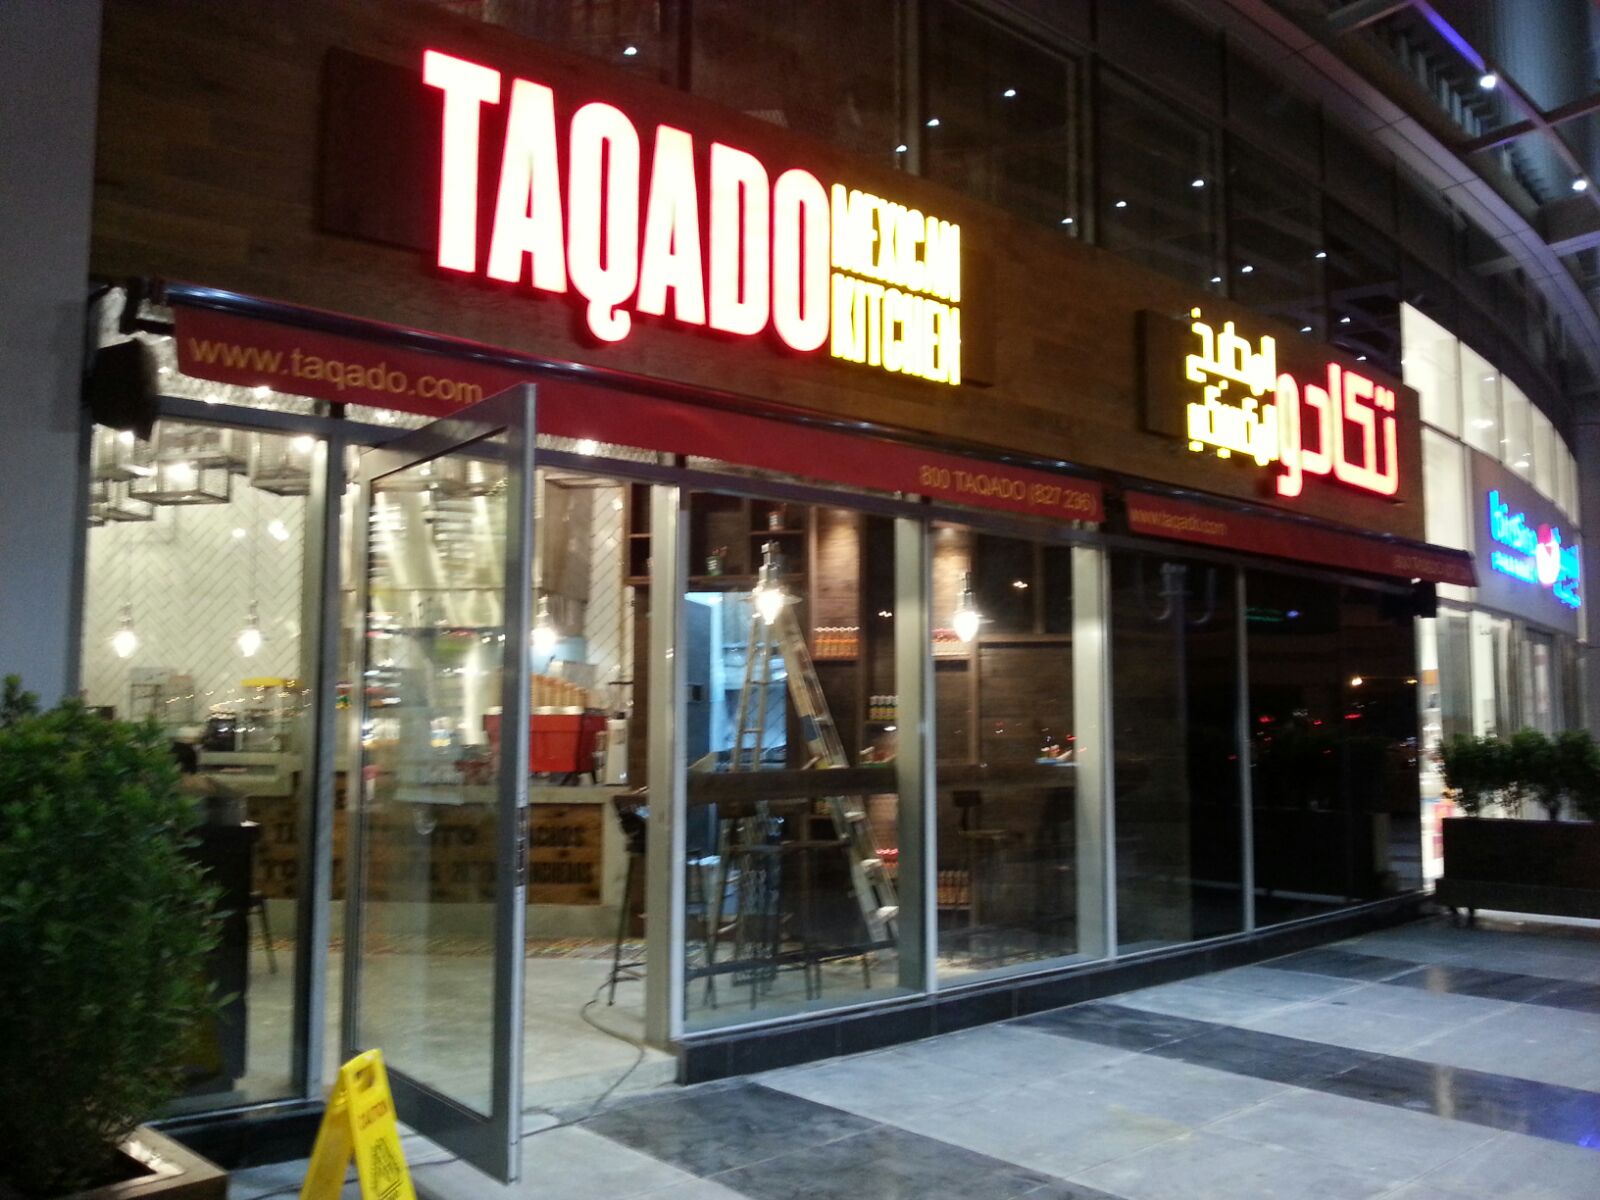 Taqado Mexican Kitchen Restaurant